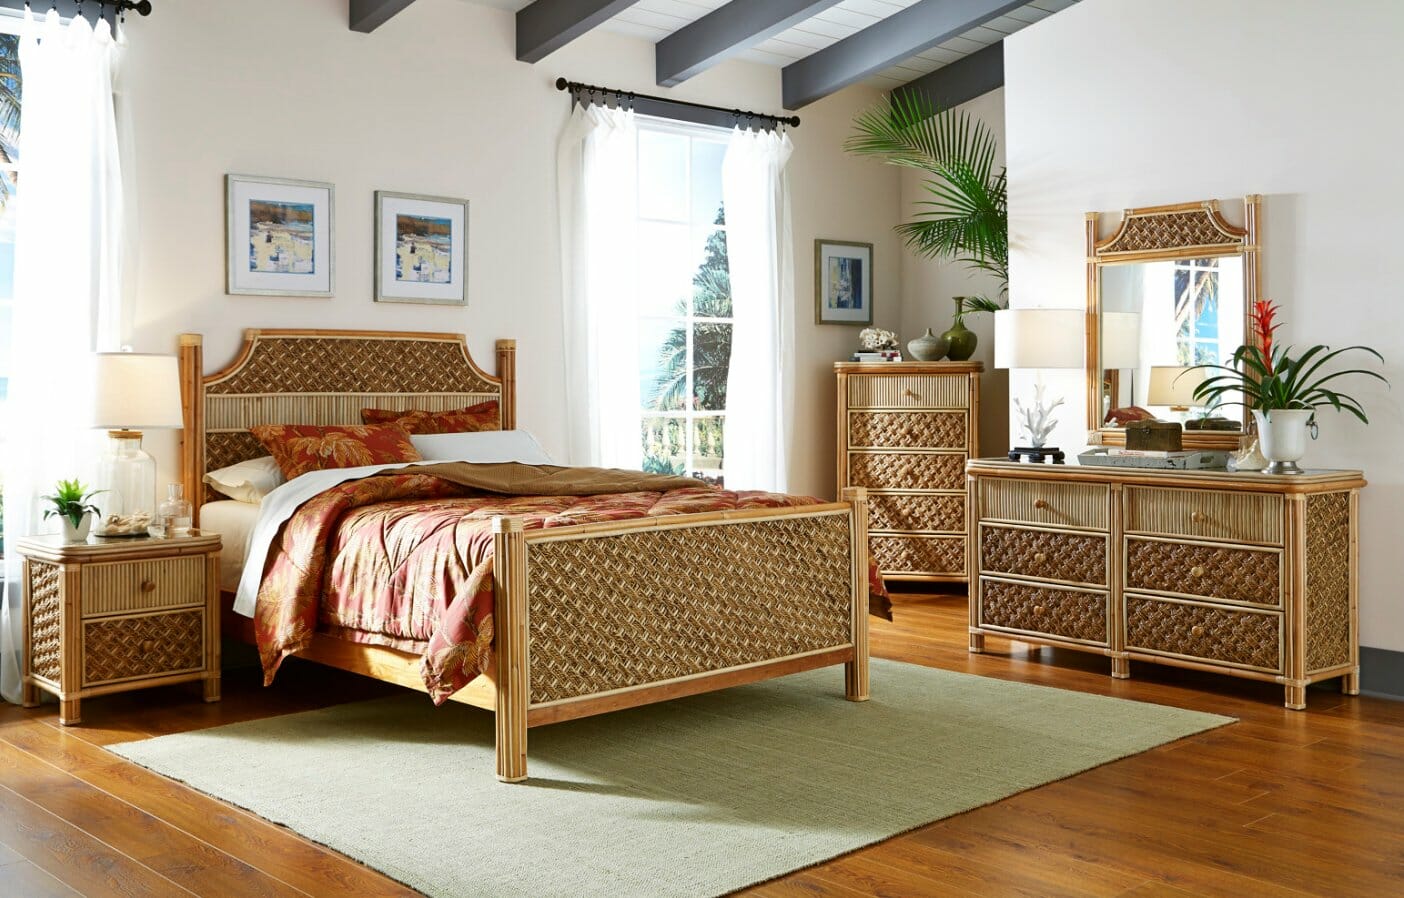 tropical island bedroom furniture